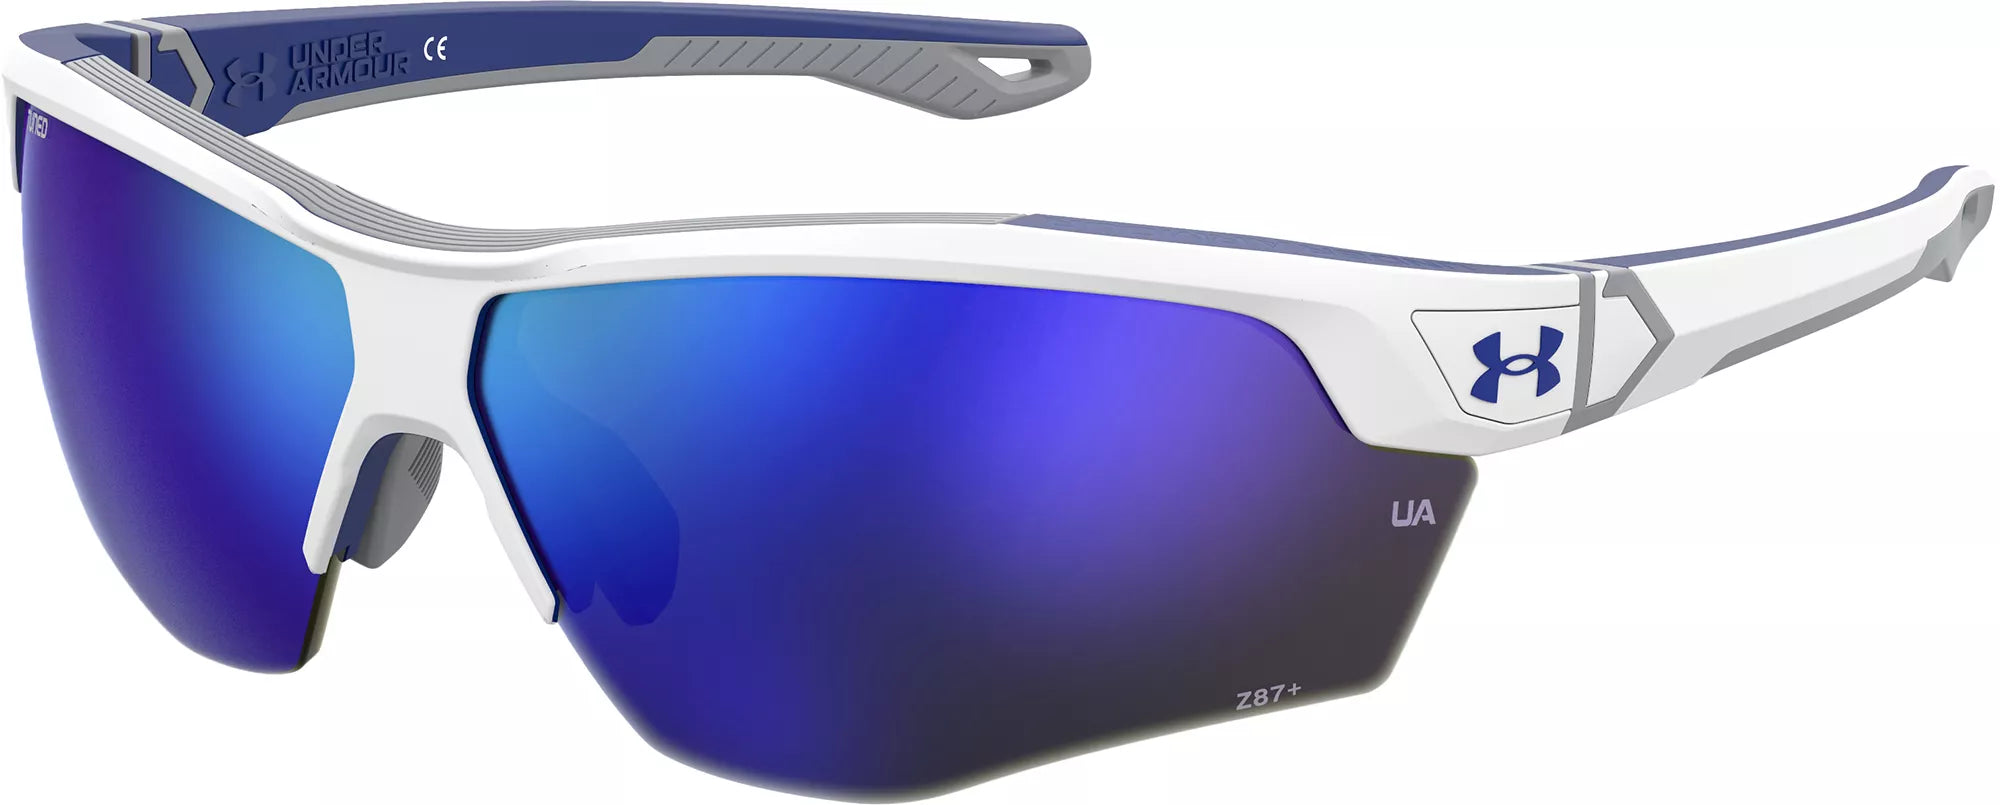 Under Armour Yard Dual Tuned Baseball Sunglasses Accessories Under Armour Matte White/Matte Royal/Mod Gray/Tuned Baseball Blue Lense  